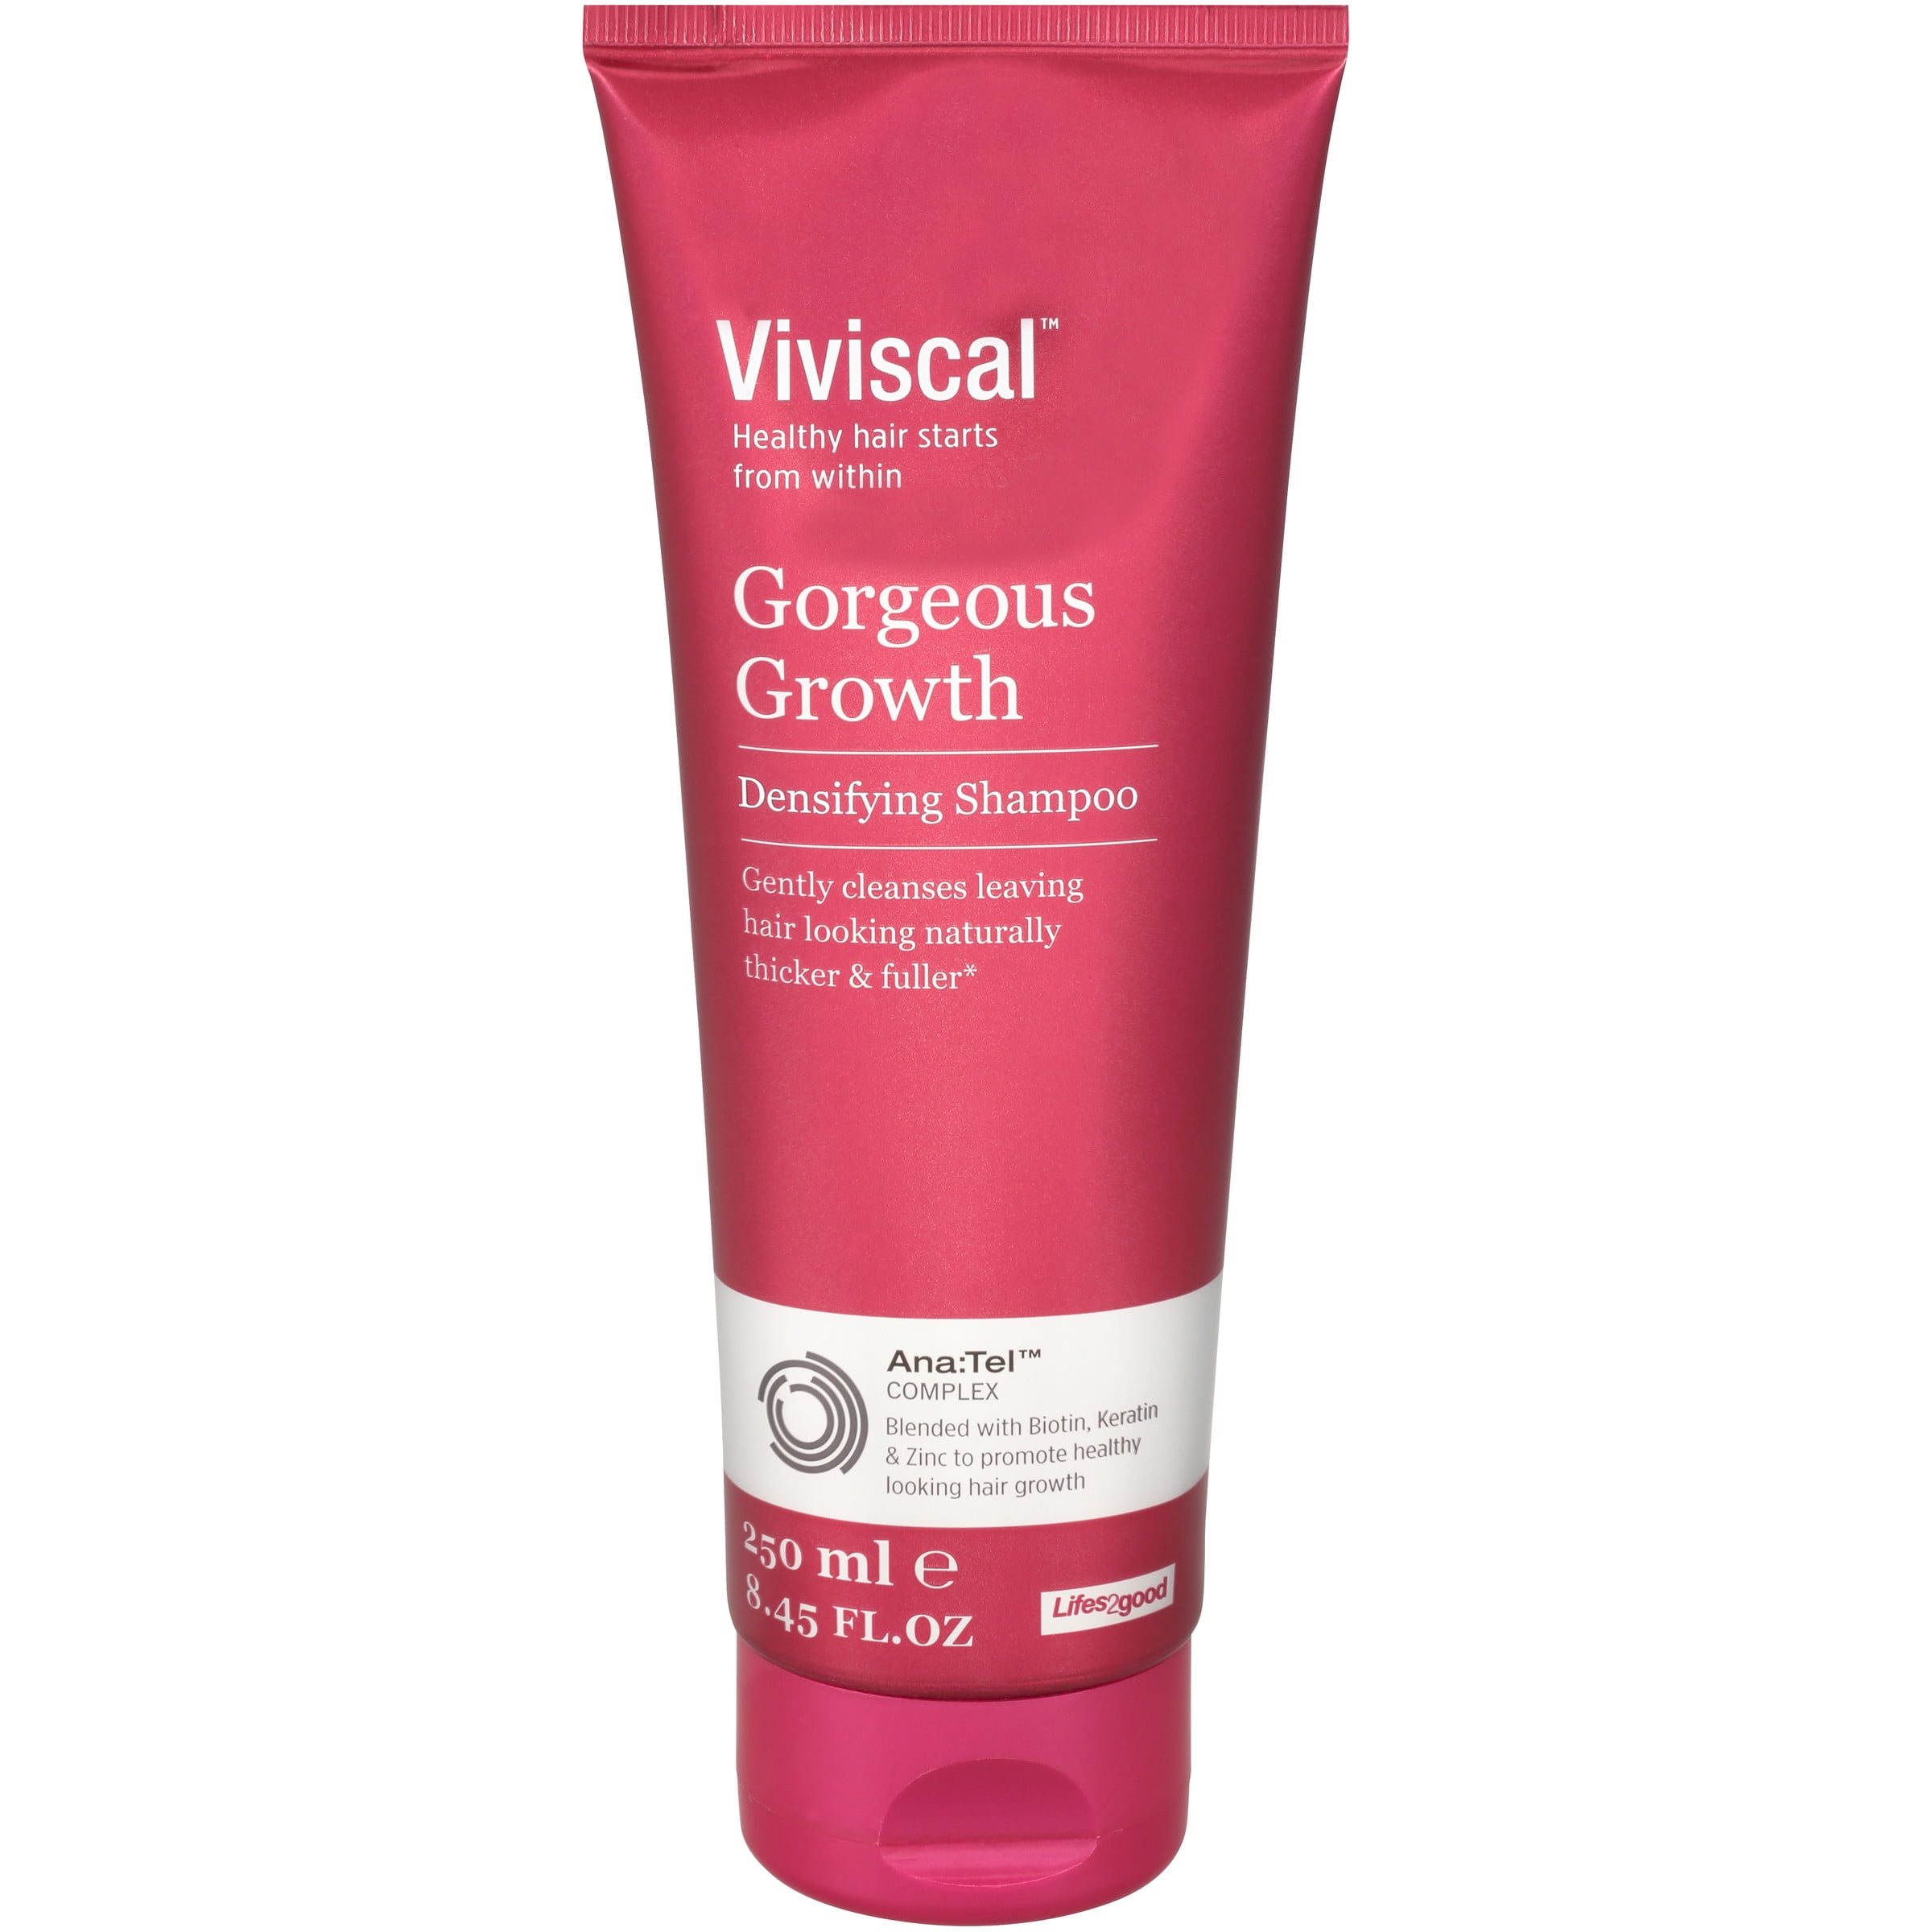 Viviscal Gorgeous Growth Densifying Shampoo, Ounce Walmart.com